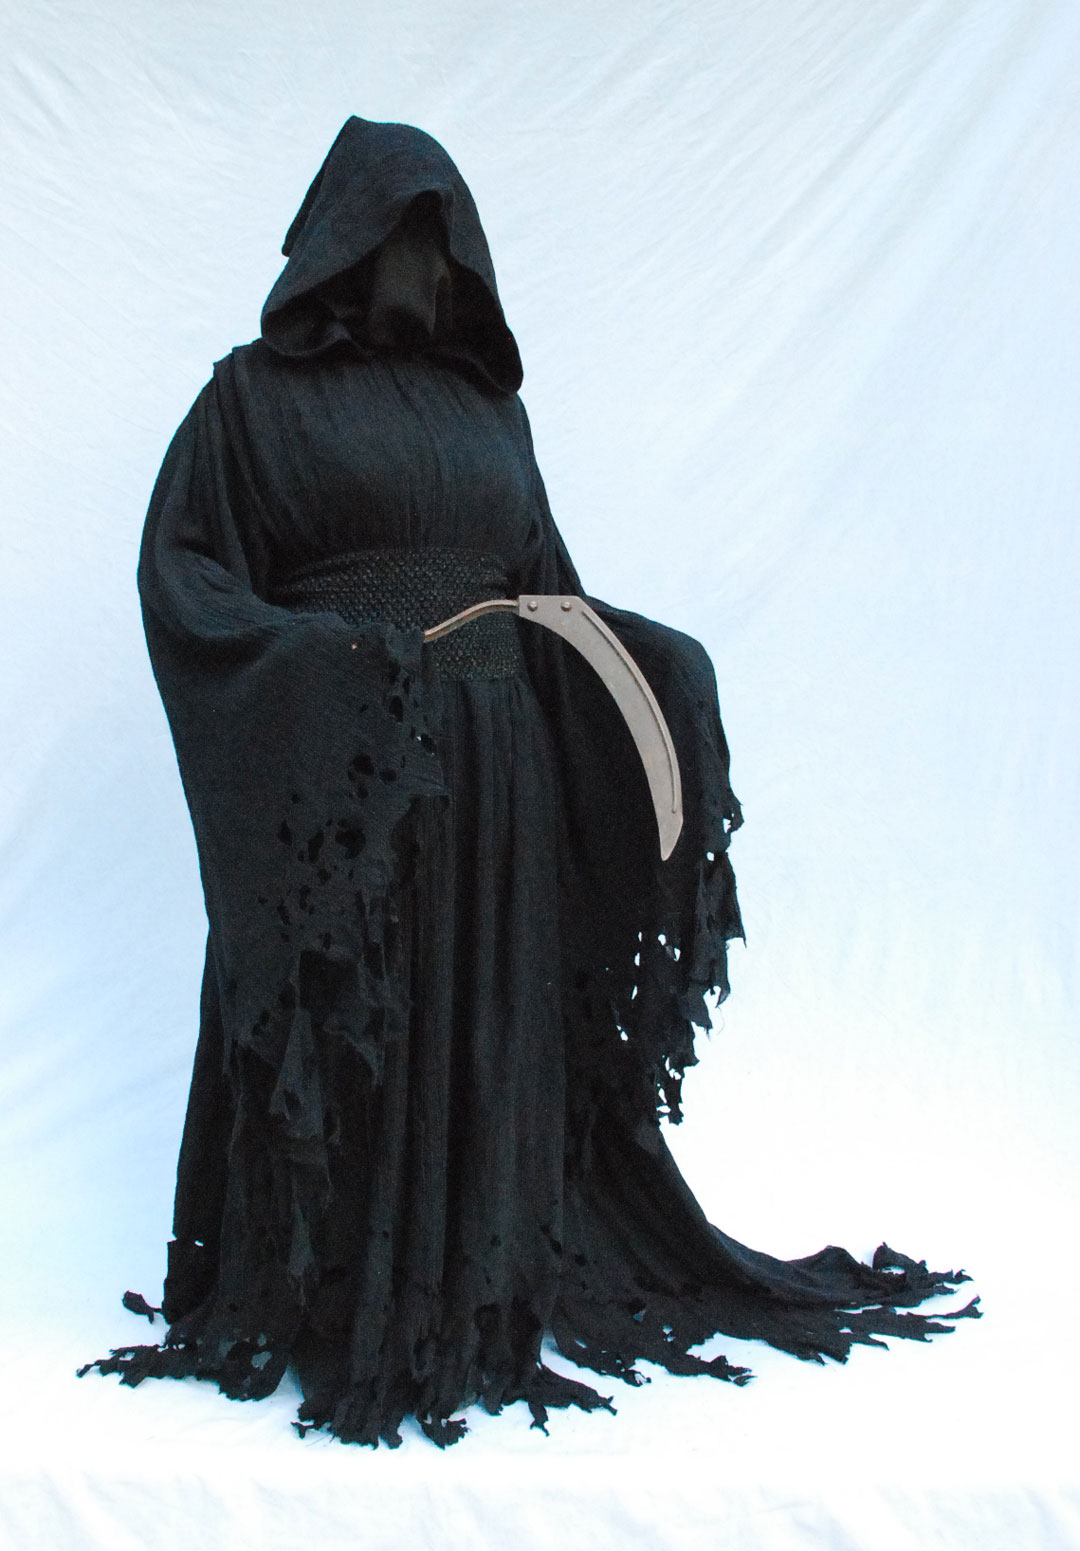 Adult Dark Reaper Costume W/ Hooded Robe